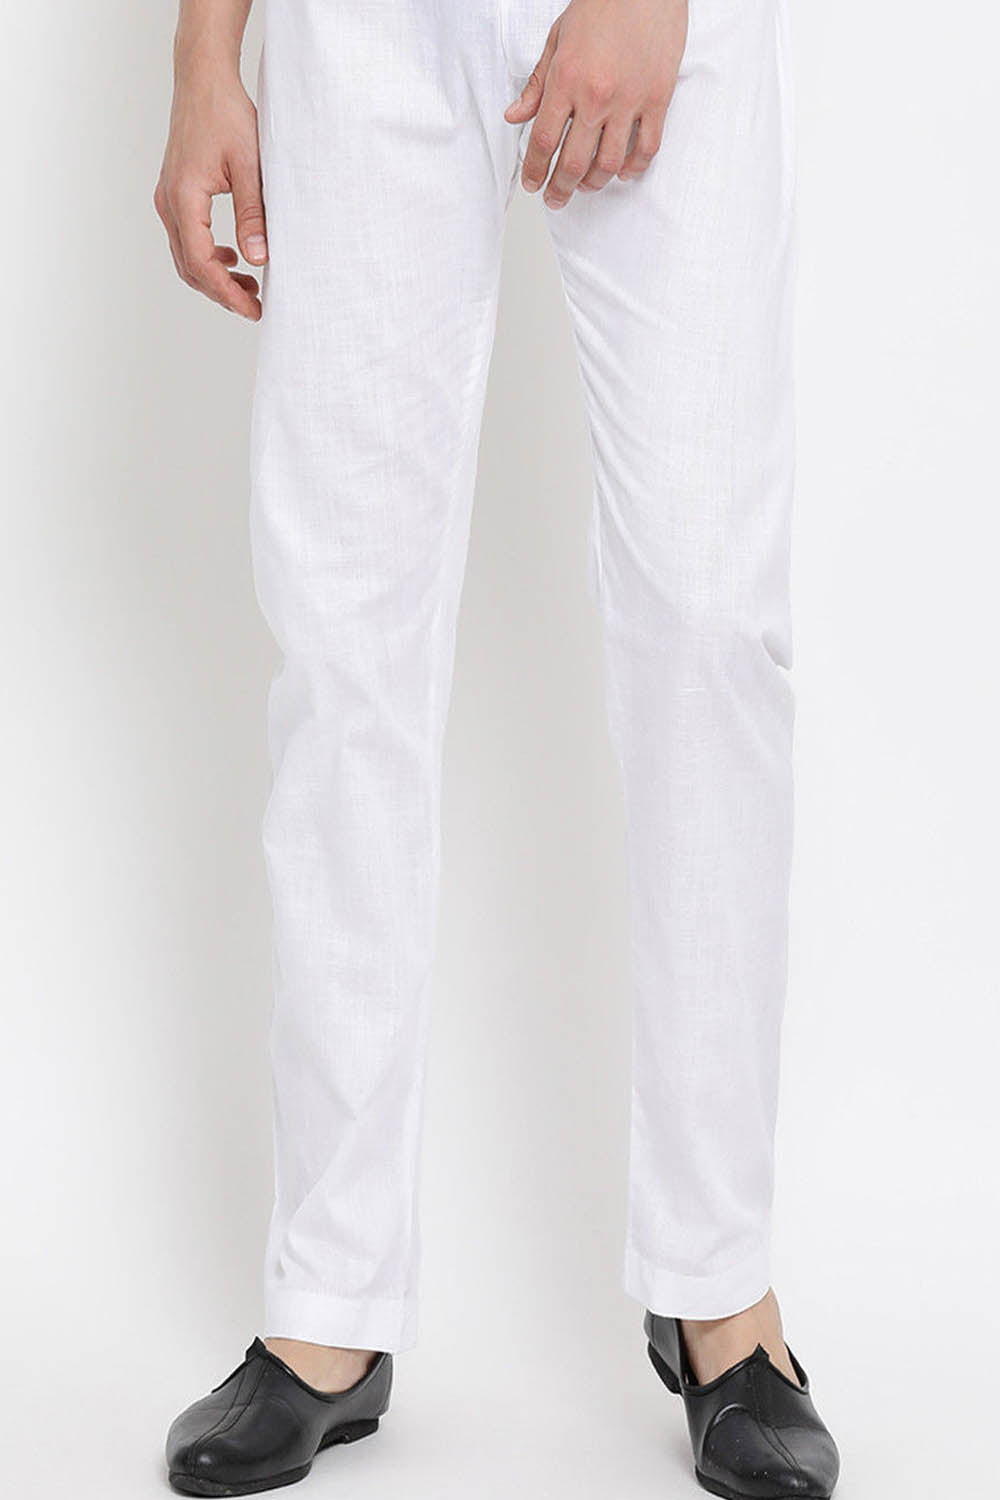 LOEWE Laser-cut cotton and silk-blend straight-leg pants | NET-A-PORTER